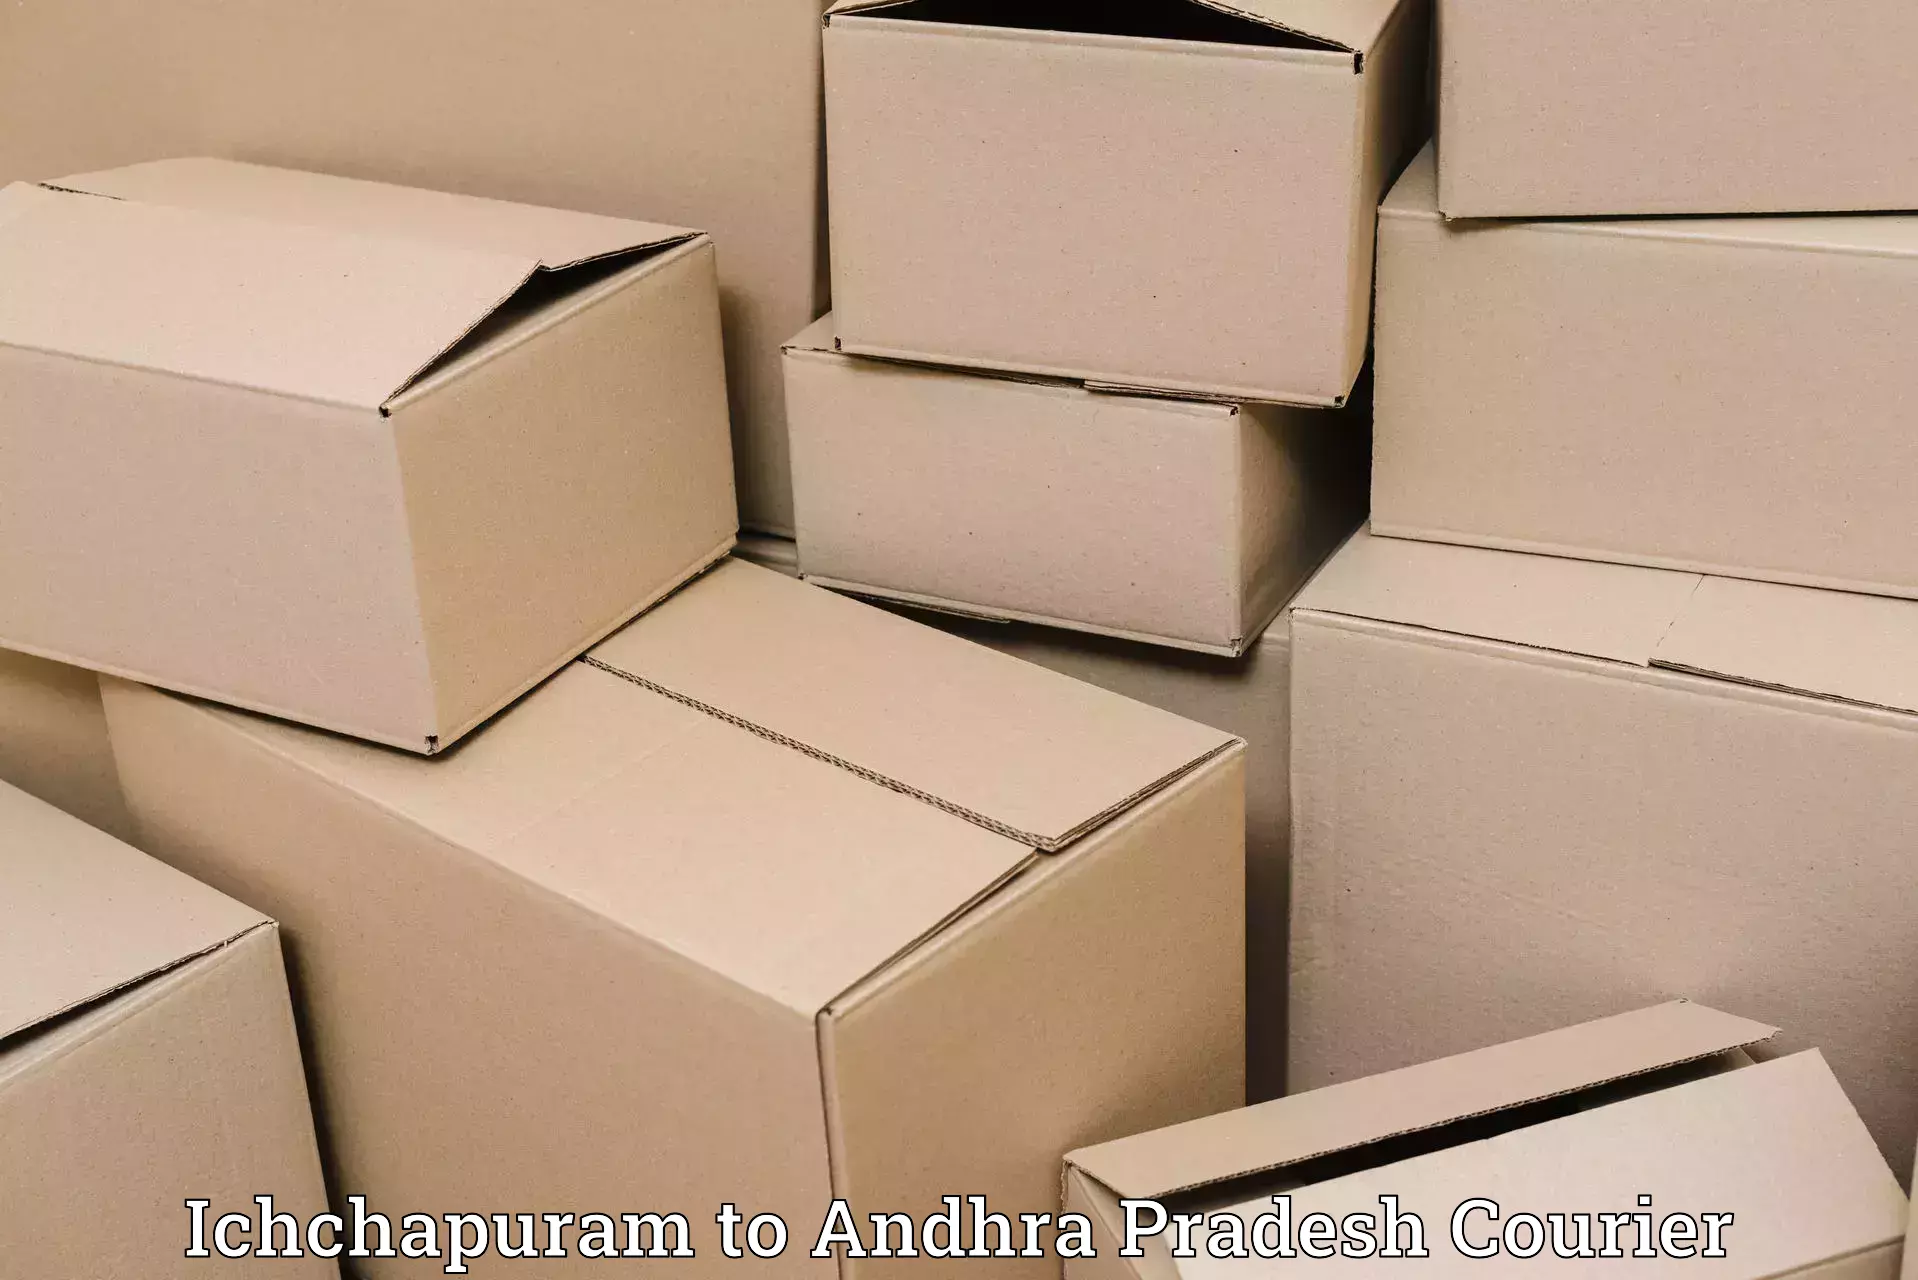 Global shipping networks Ichchapuram to Chodavaram